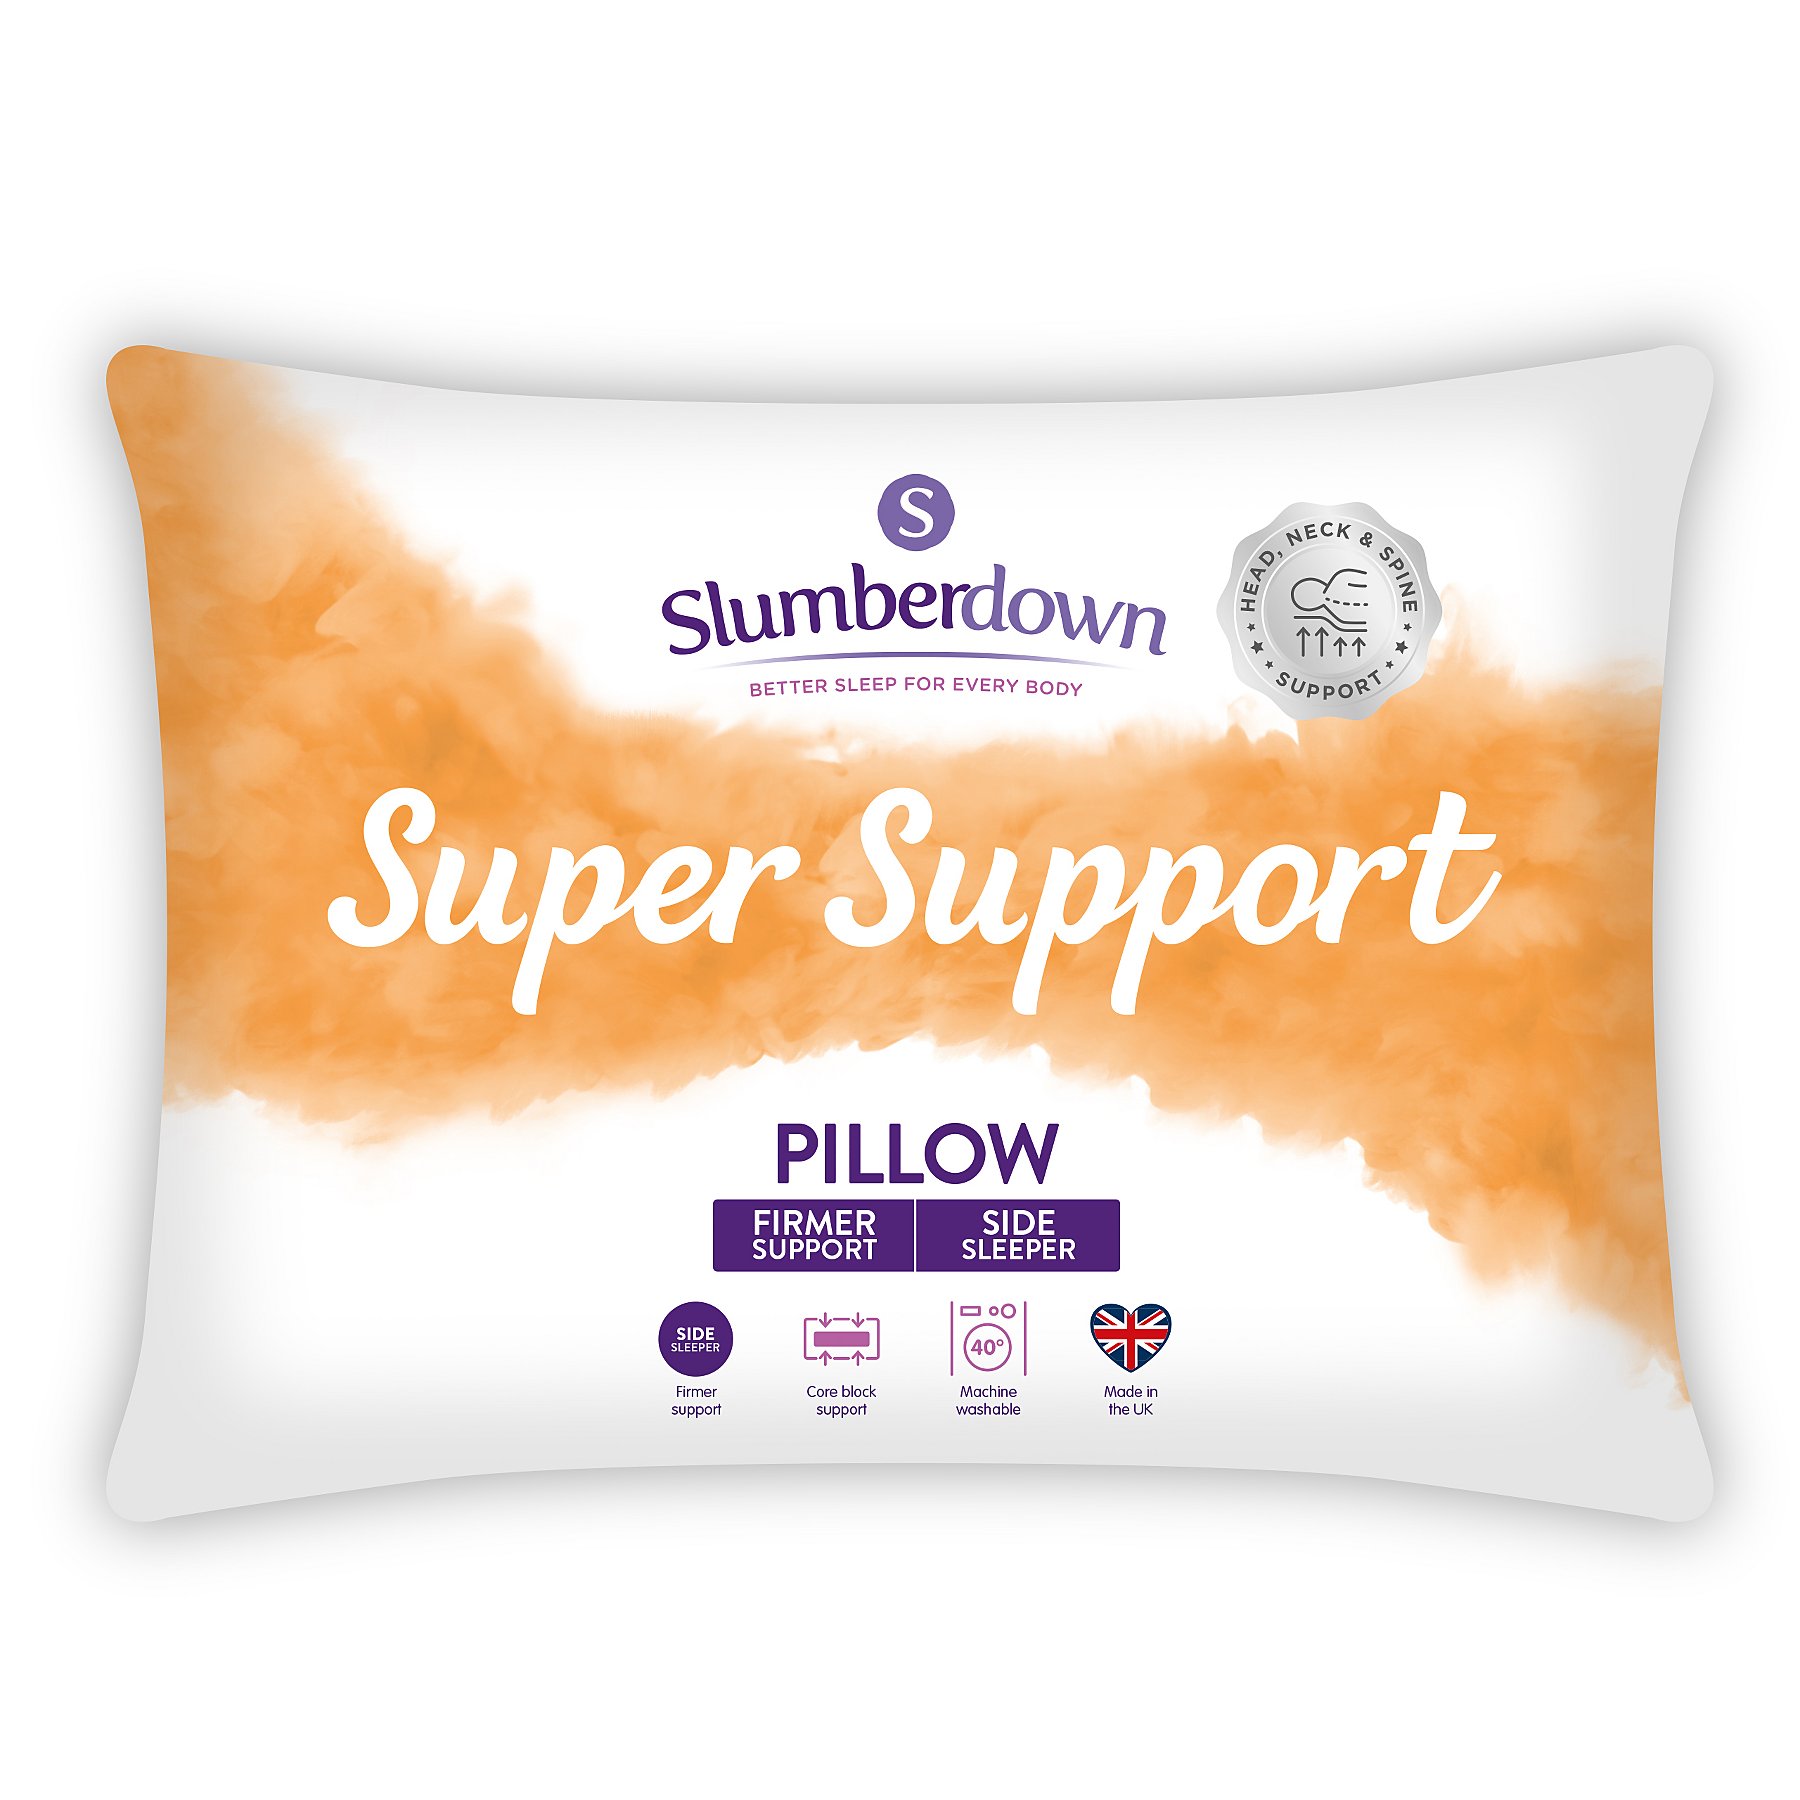 Подушка support. Упаковка Pillow Pack. Жевательные подушечки на белом фоне. Support Pillows meaning. Slumberdown feels like Home Pillow pair.